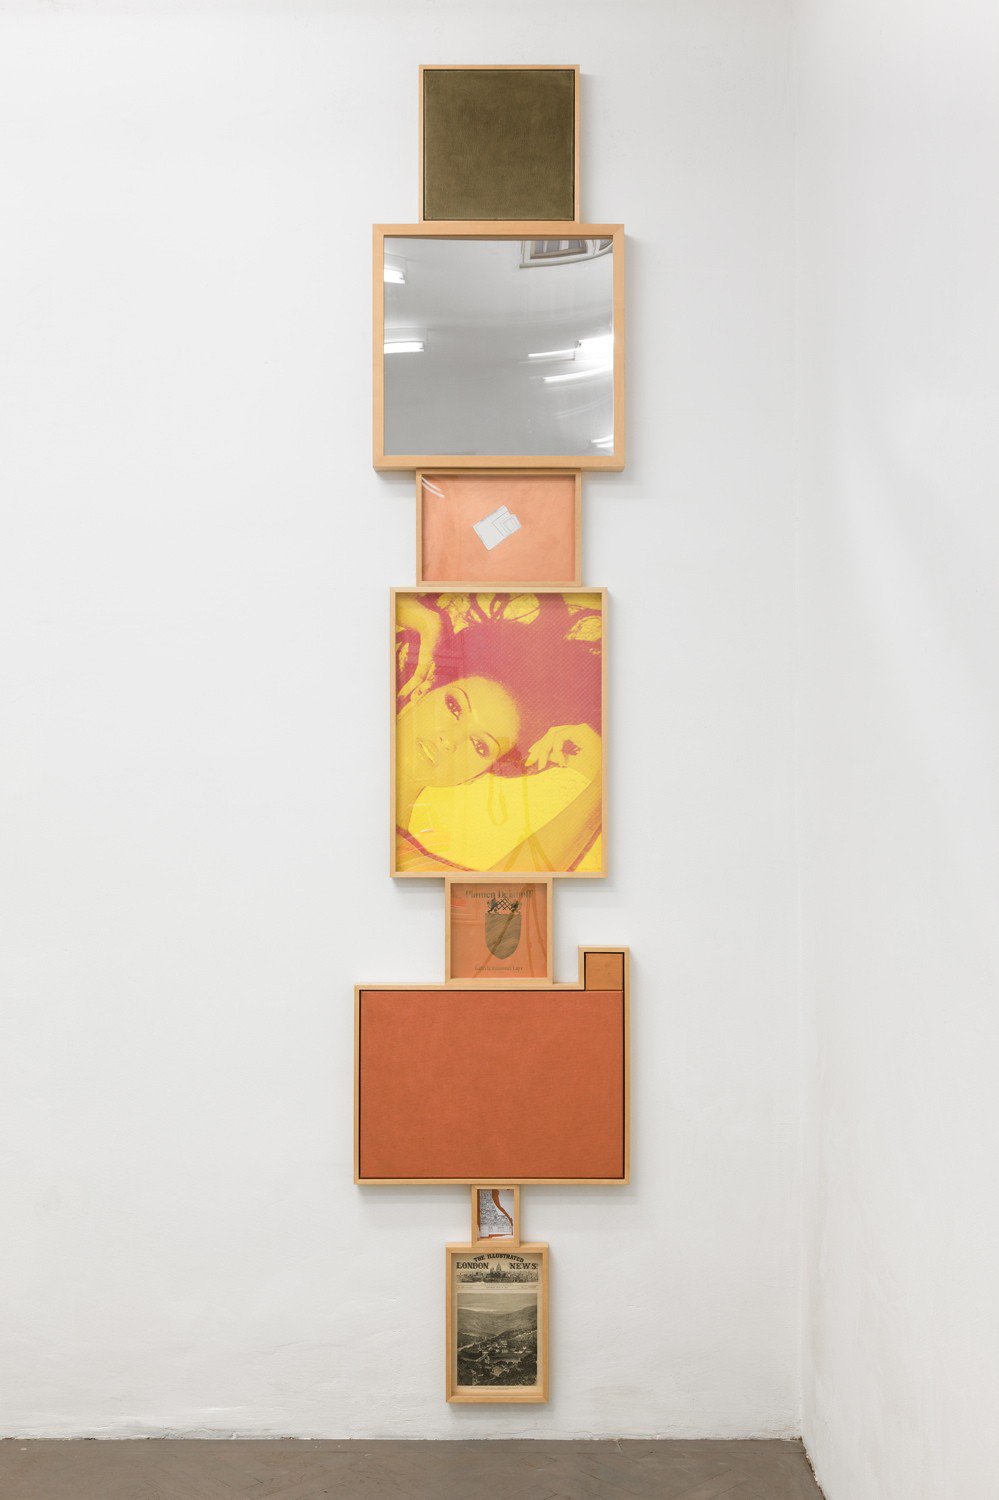 Plamen DejanoffAd (Foundation), 2013Bronze on canvas, bronze and pencil on paper, mirror and screen printDimensions variable